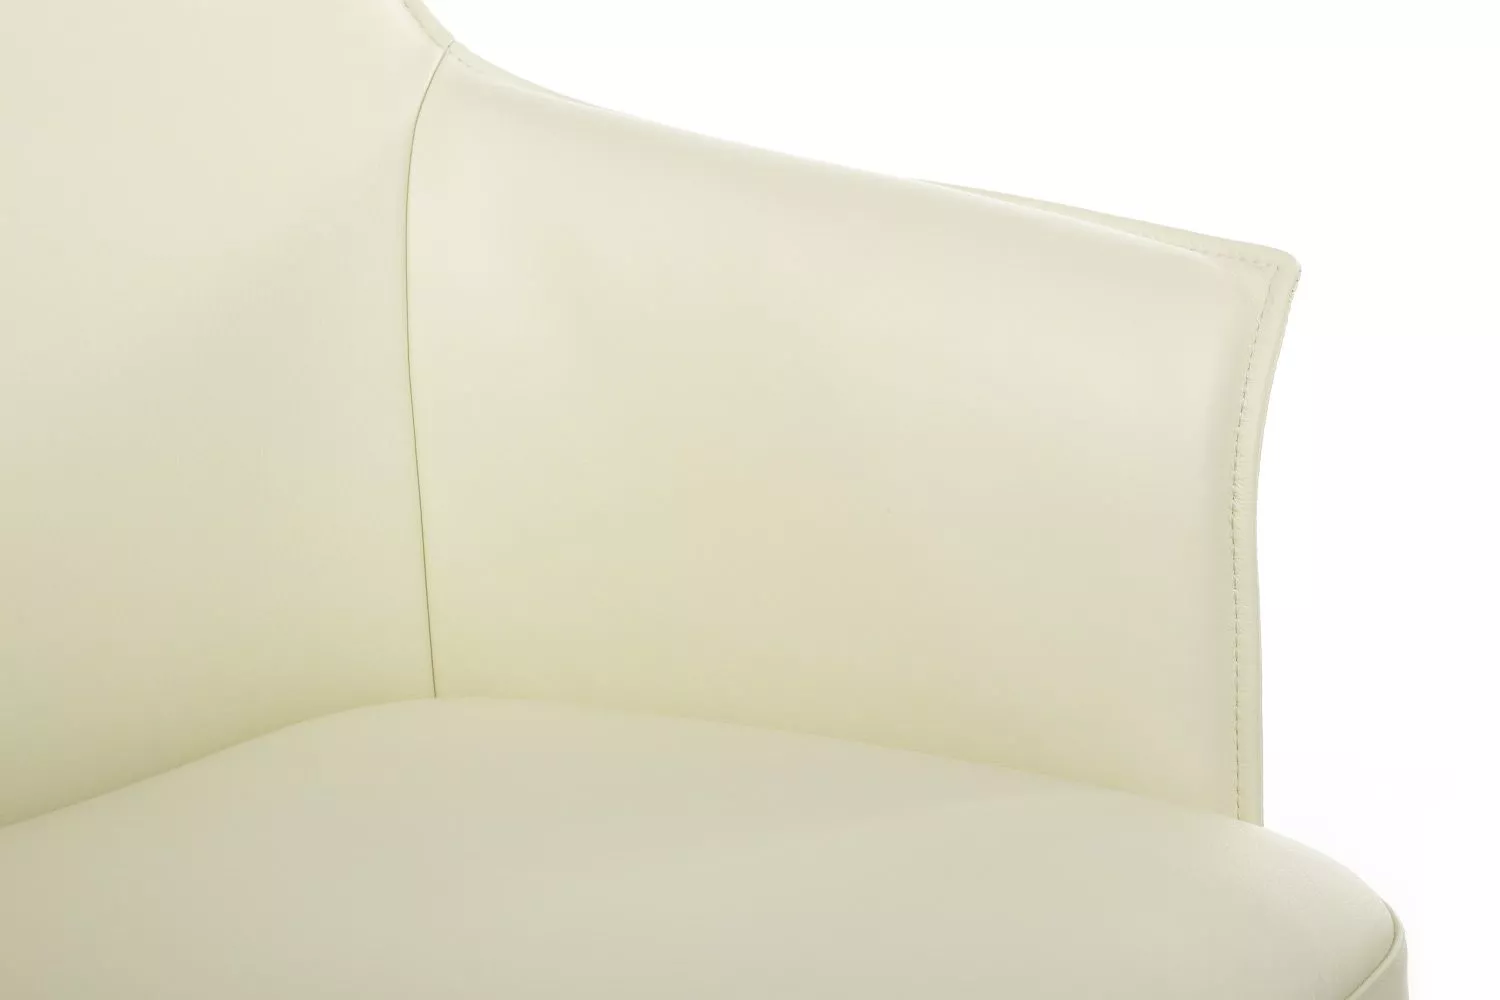 Кресло RIVA DESIGN Rosso-ST (C1918) белый